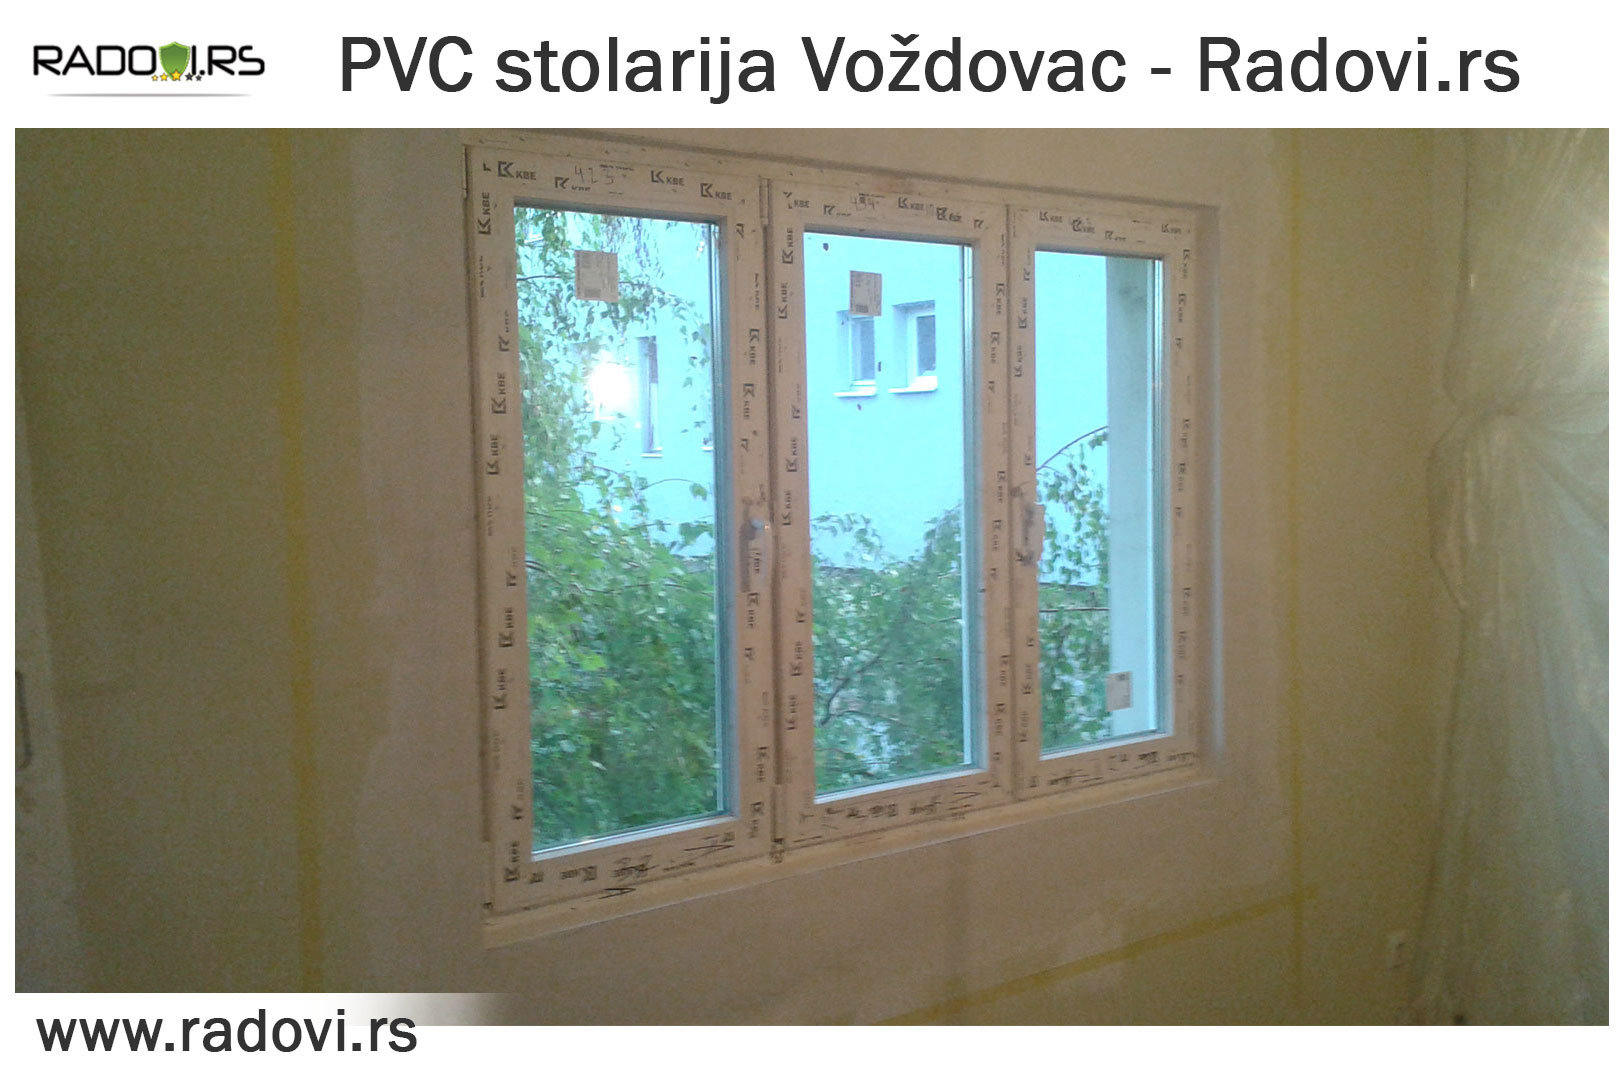 PVC stolarija Voždovac - PVC Stolarija Tim - Radovi.rs